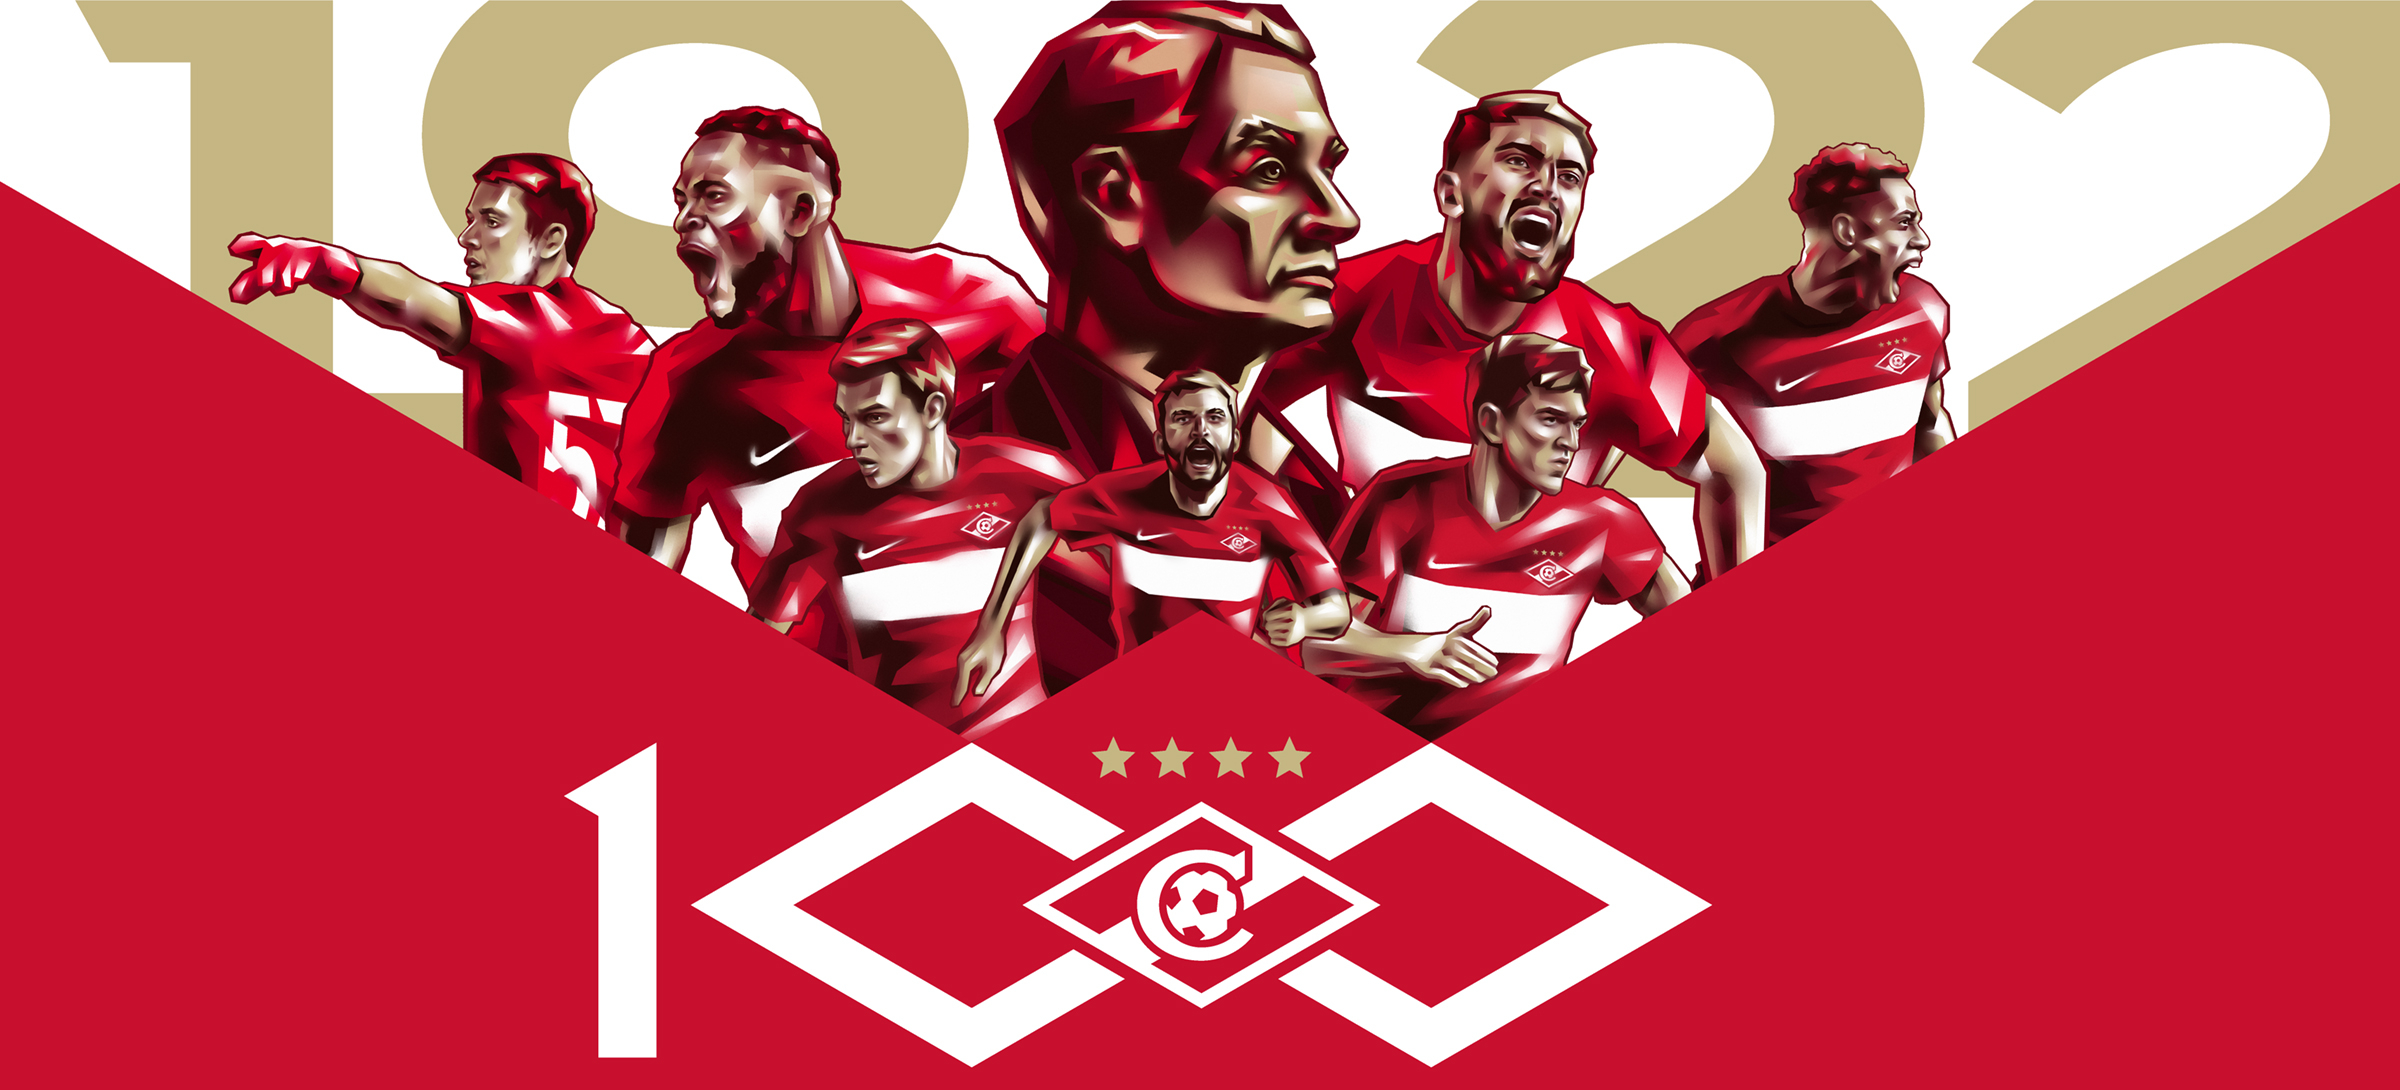 Football Club Spartak Moscow history